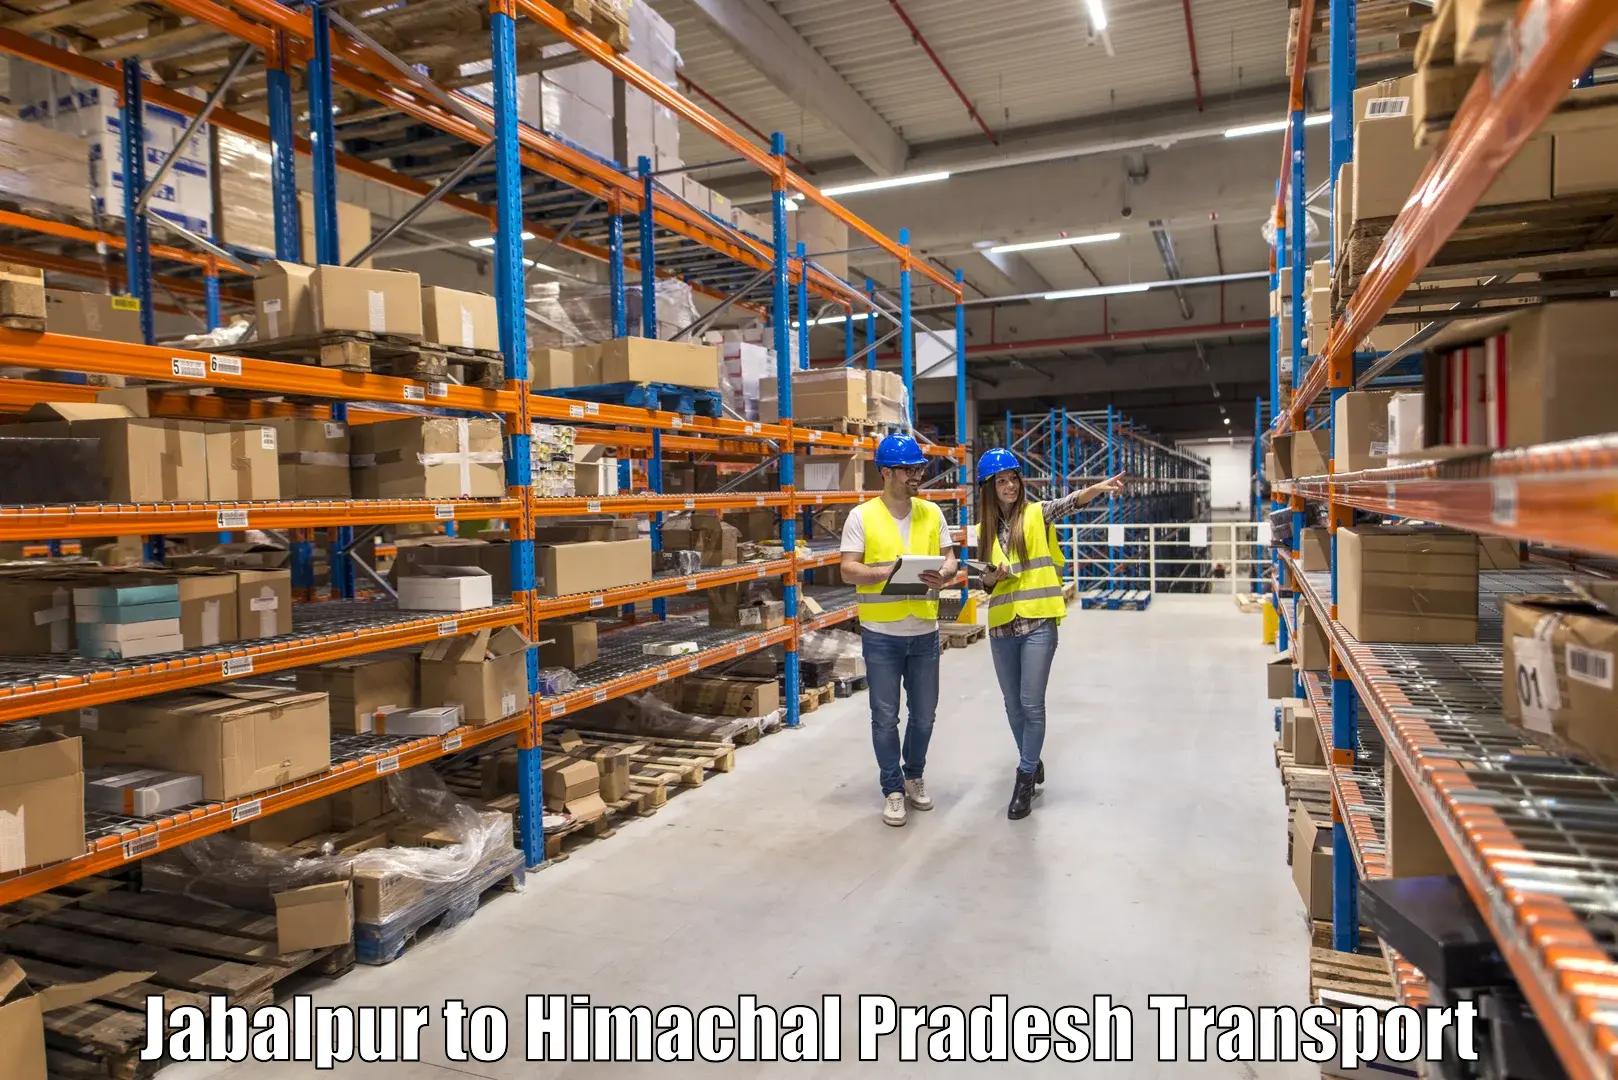 Truck transport companies in India Jabalpur to Joginder Nagar